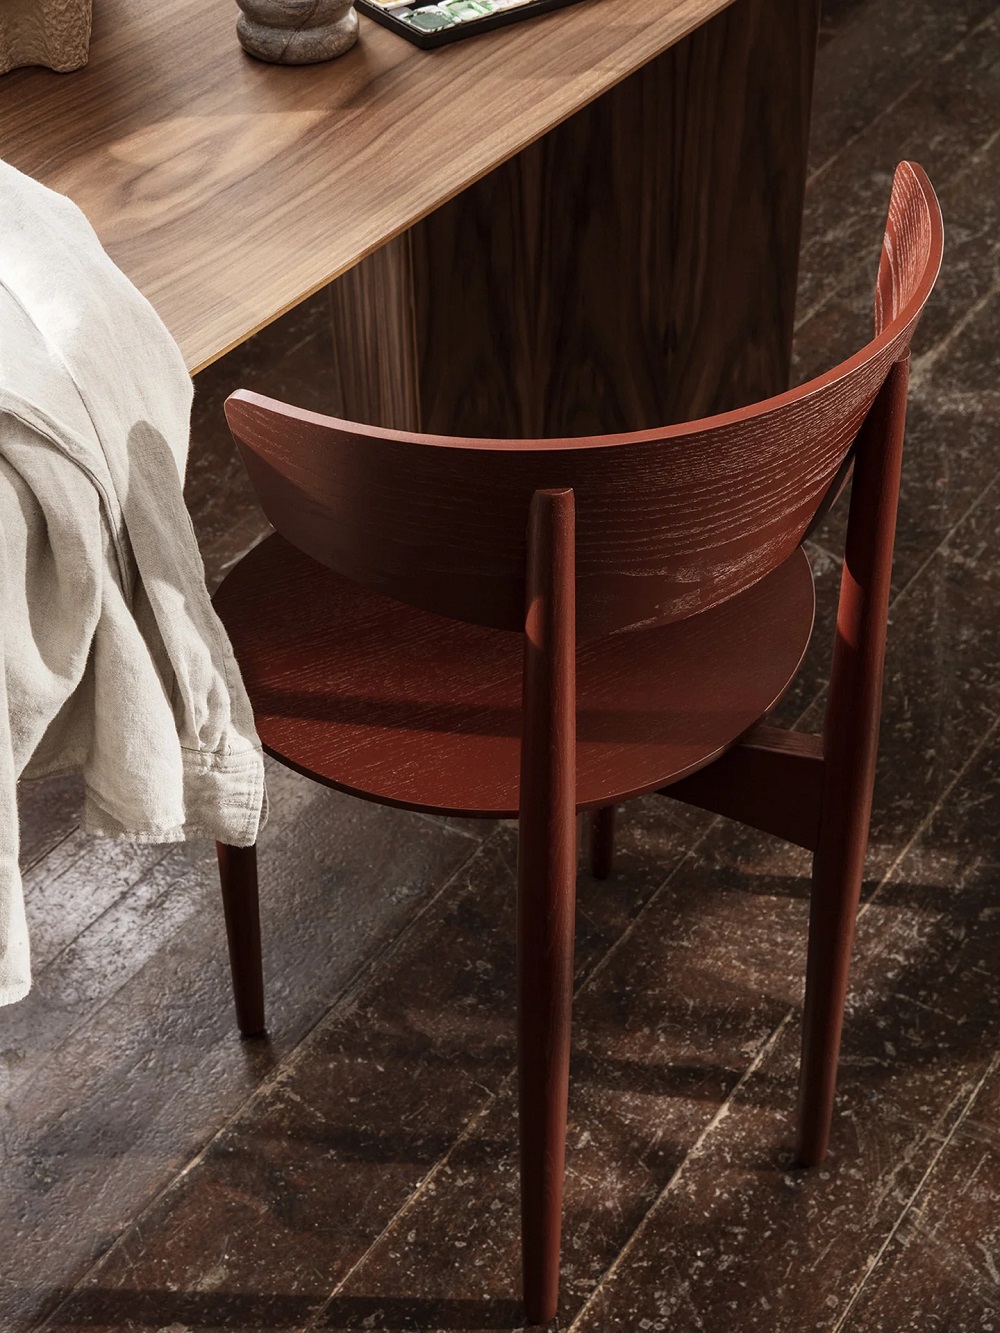 Стул Herman Dining Chair Wood Red Brown